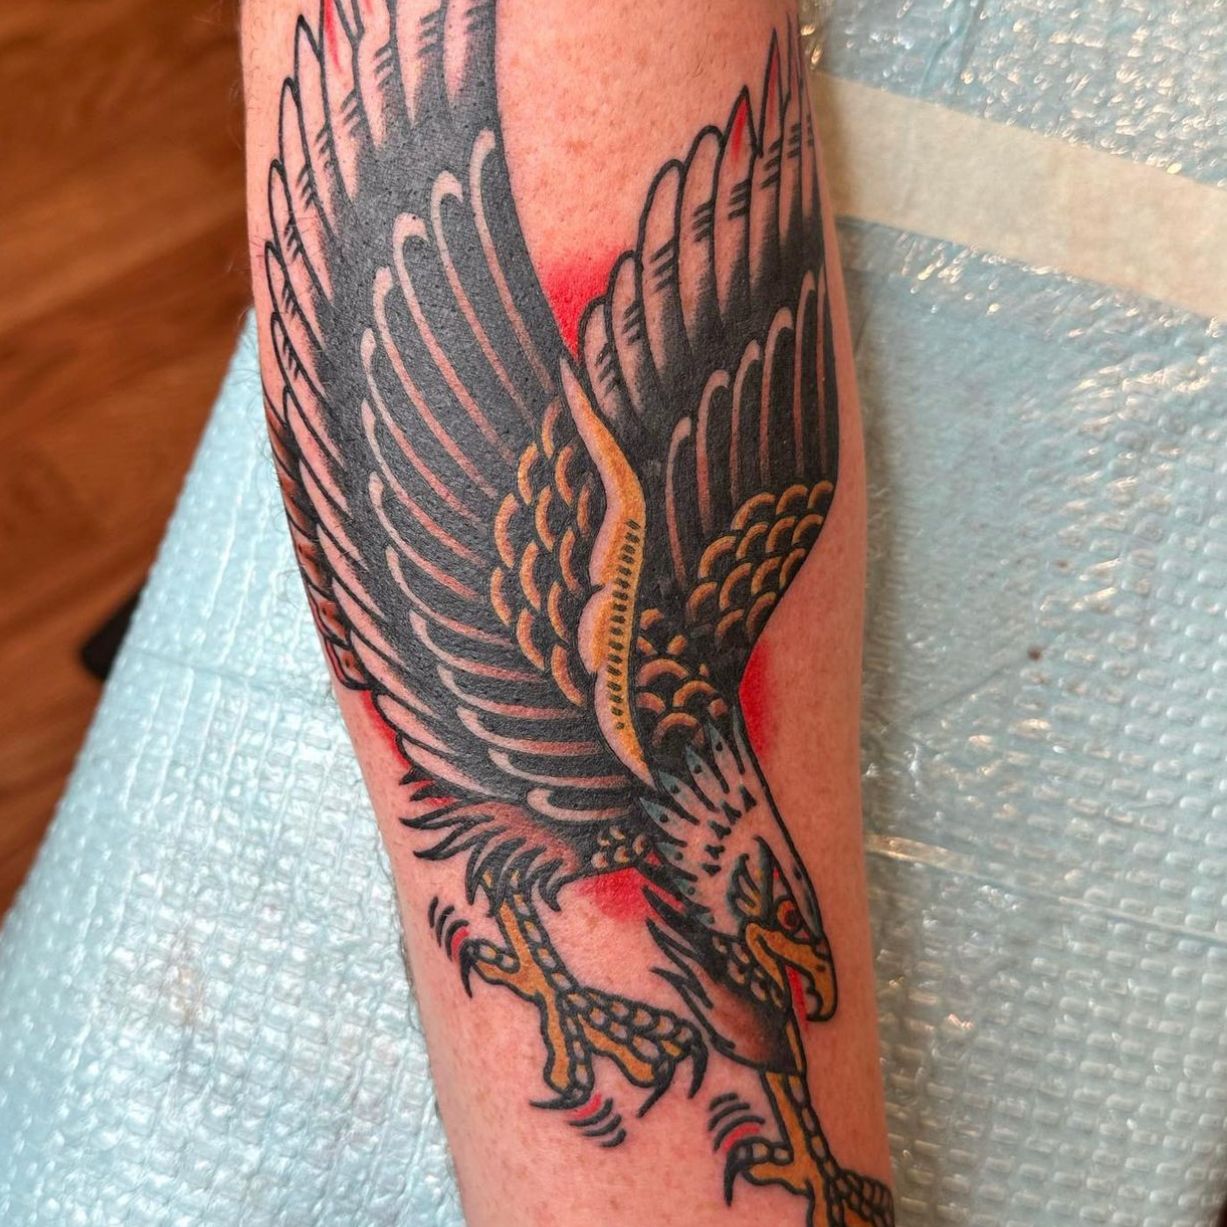 Tattoo Artist in Plymouth, Michigan